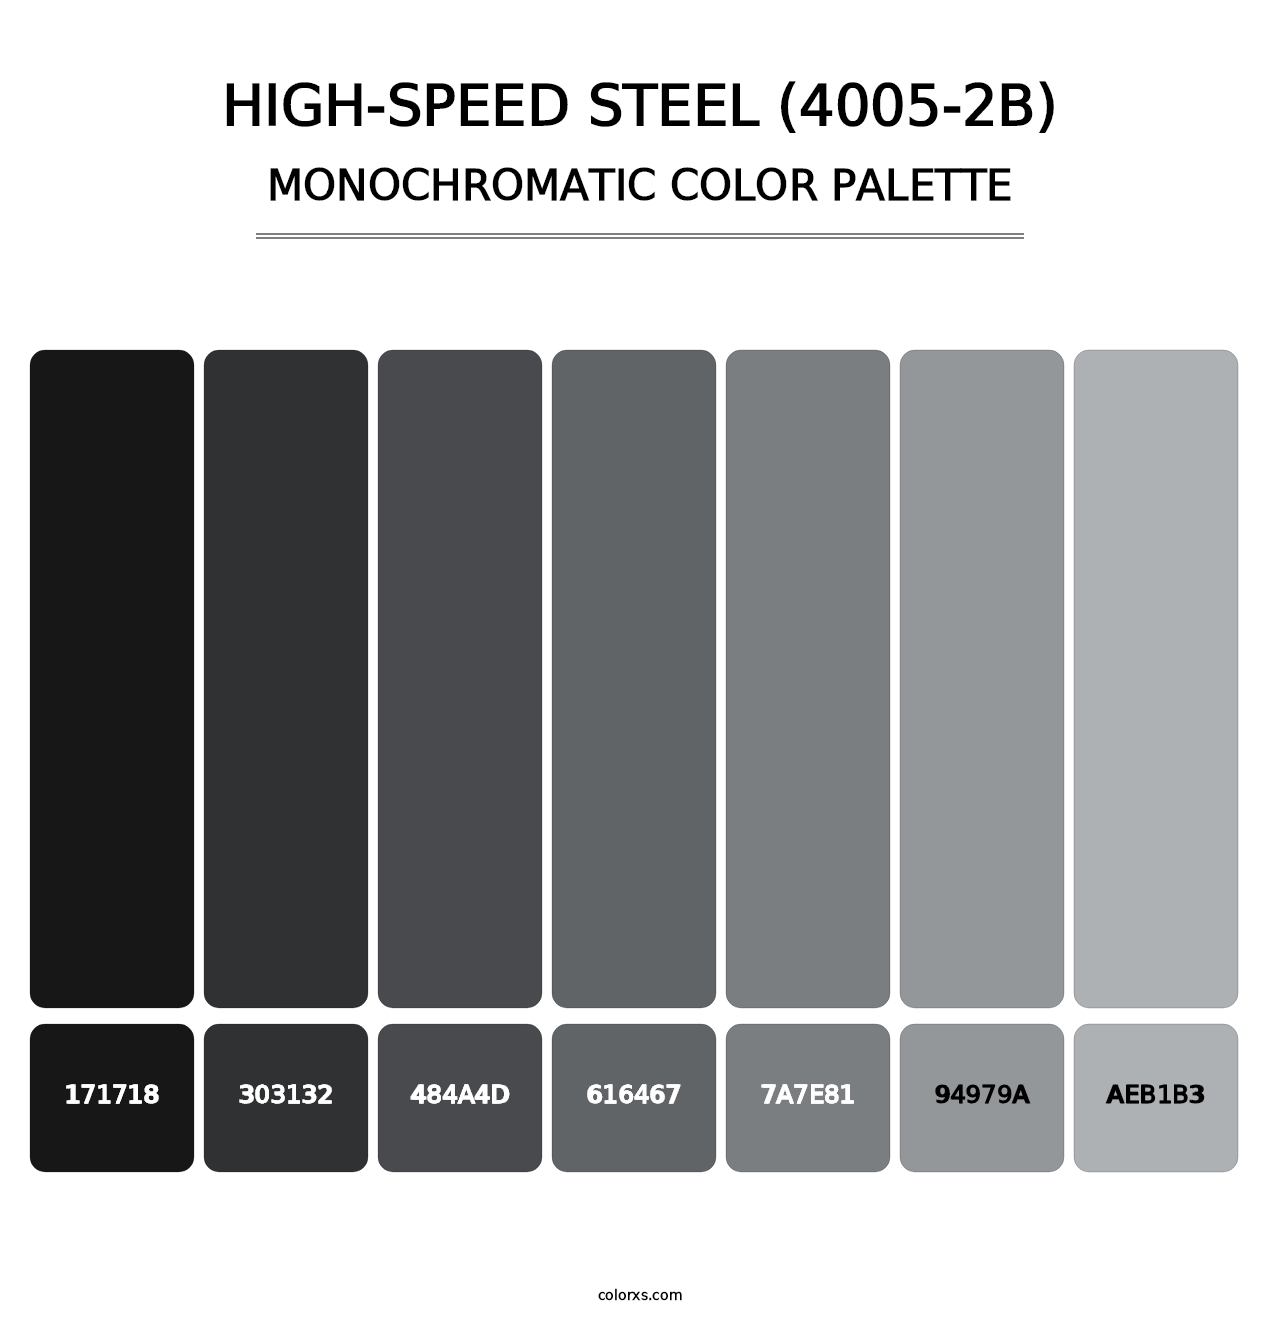 High-Speed Steel (4005-2B) - Monochromatic Color Palette